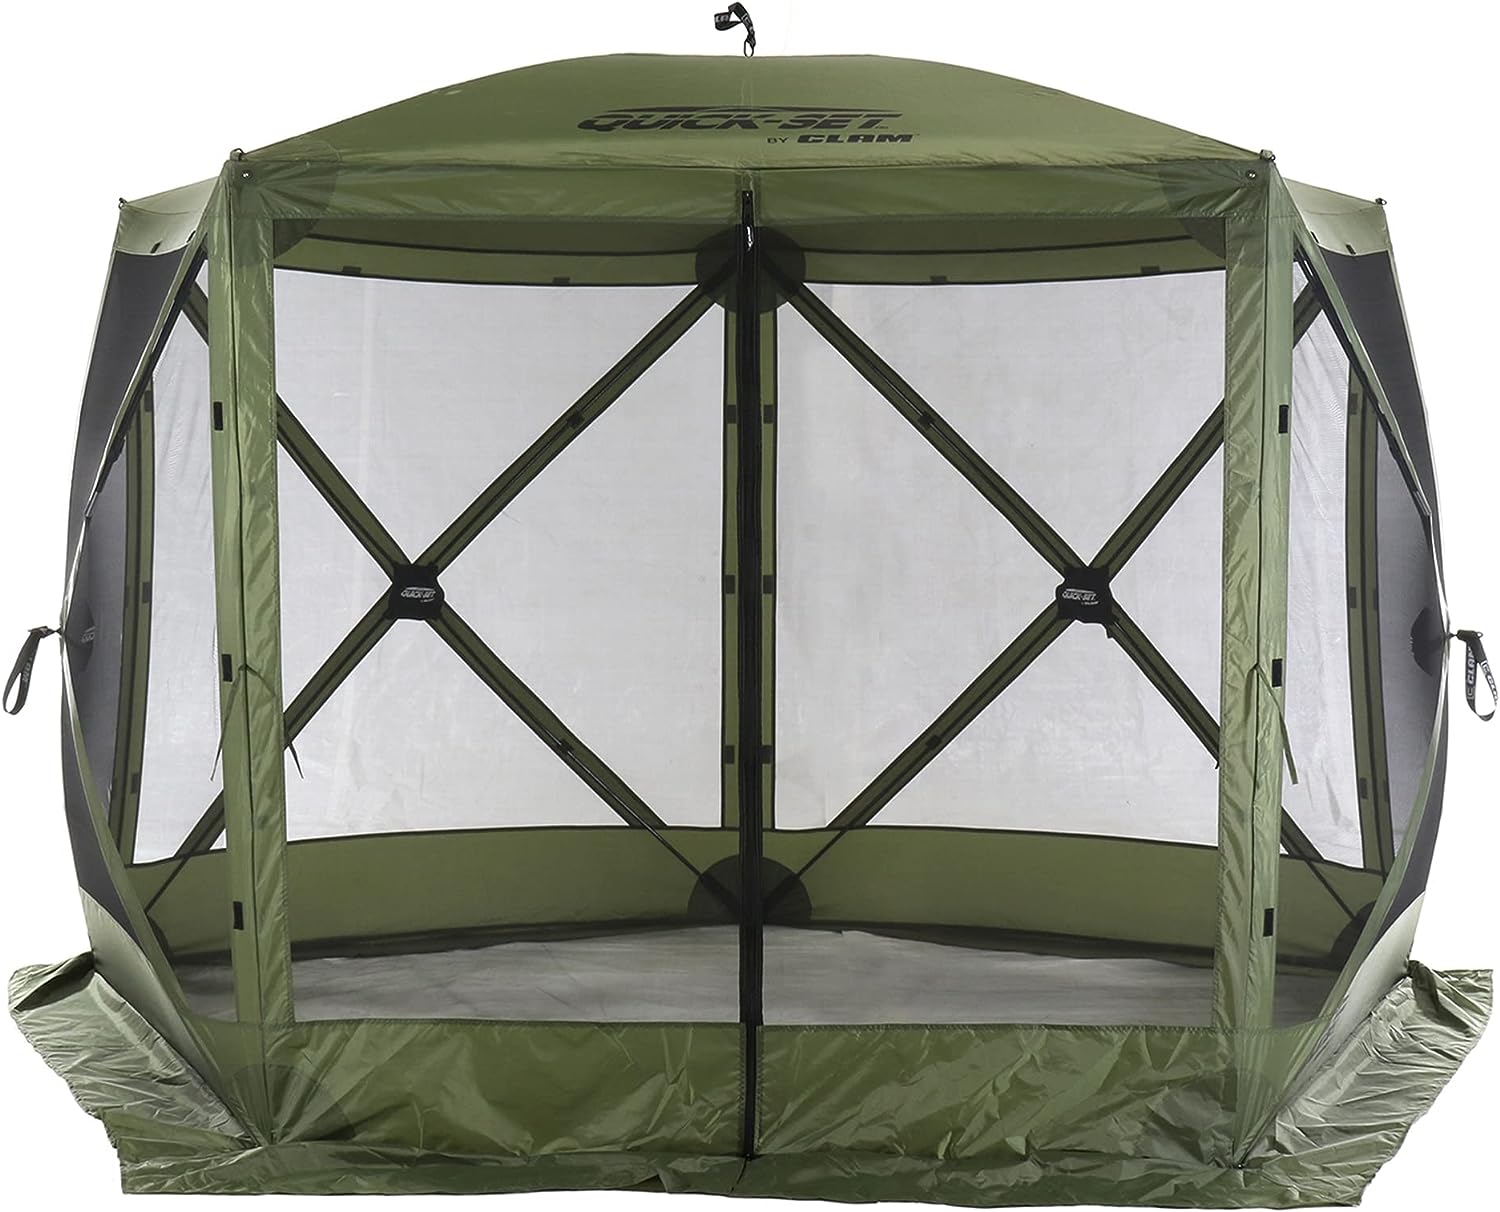 CLAM Quick-Set Venture 9 x 9 Foot Portable Pop-Up Outdoor Camping Gazebo Screen Tent